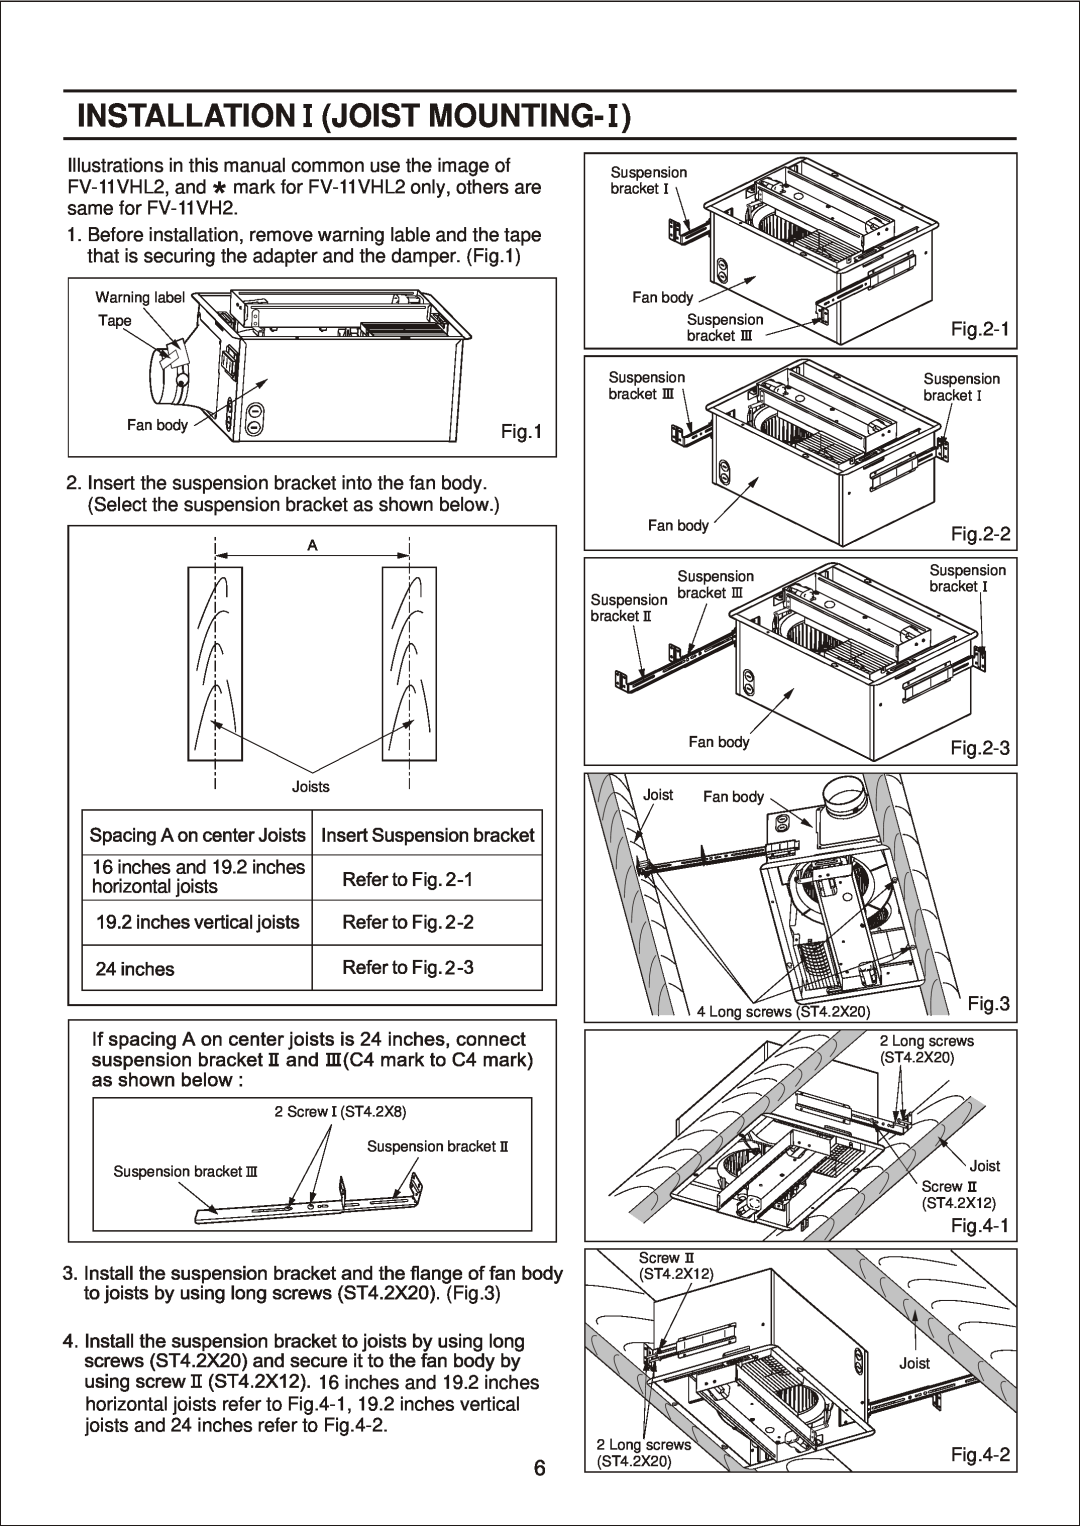 Panasonic FV-11VH2 manual Installation Joist Mounting 